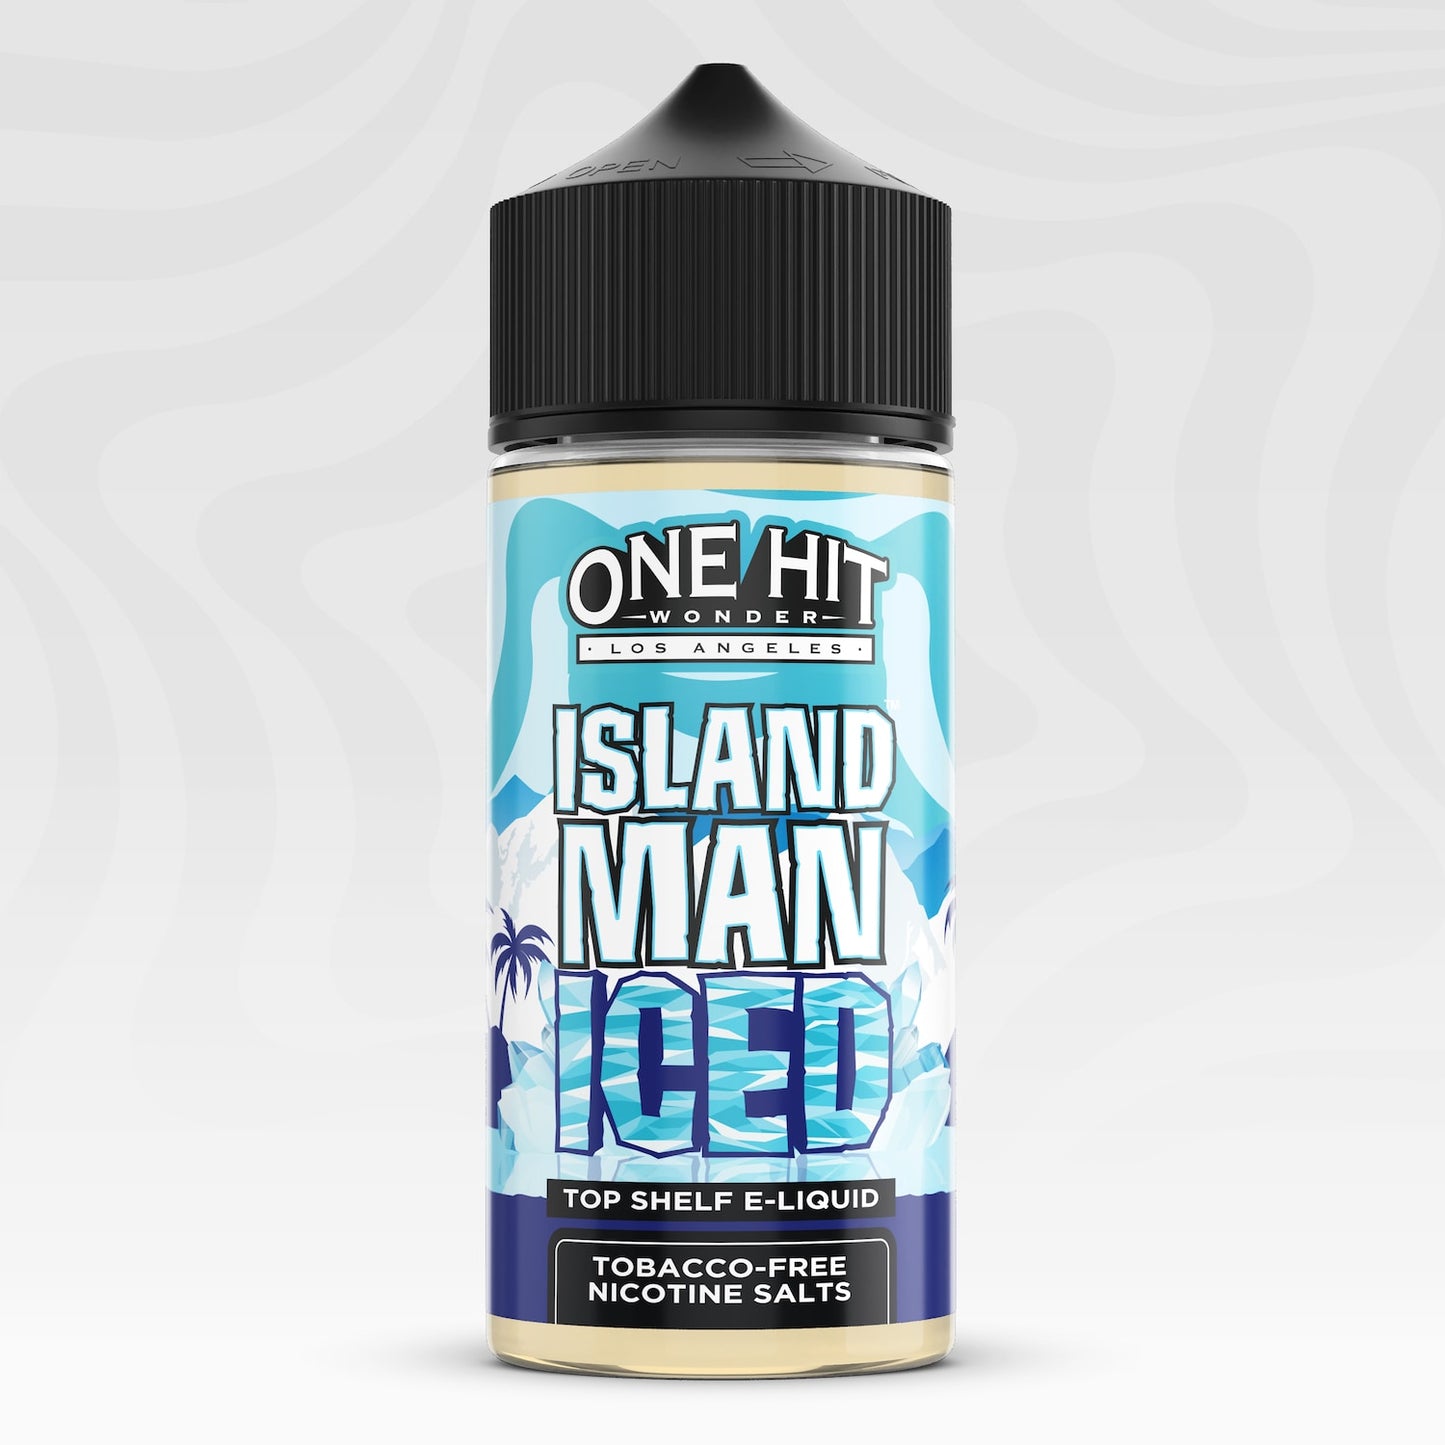 Island Man Iced by One Hit Wonder TFN Series 100mL bottle